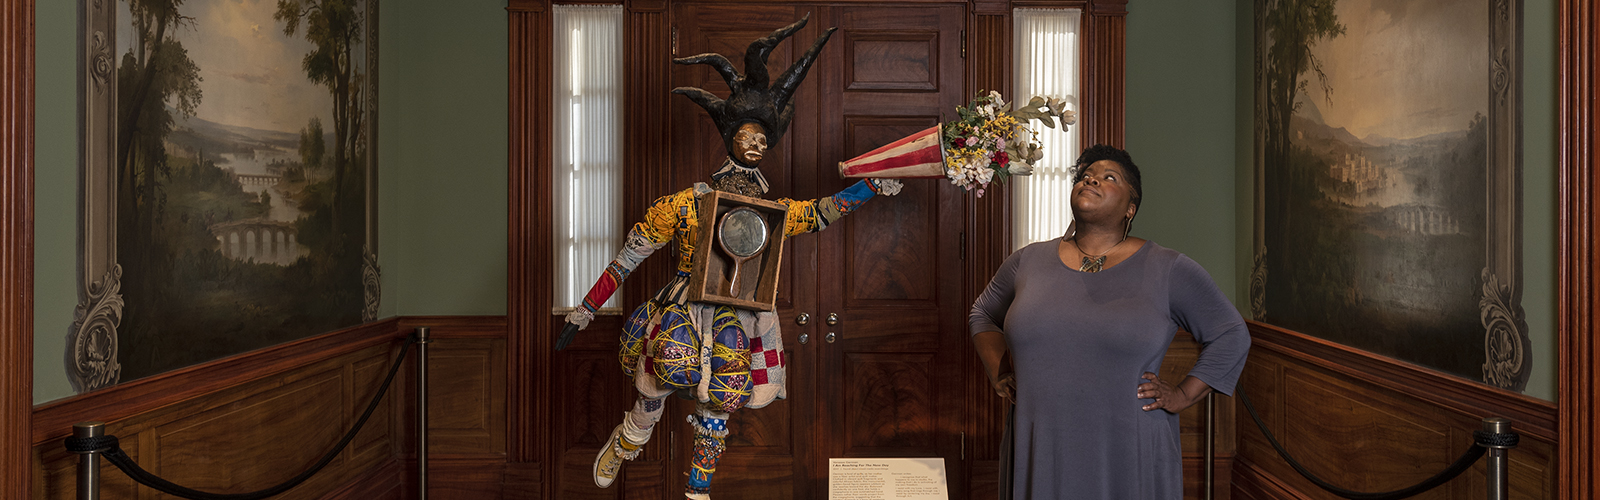 The Taft Museum of Art's 2018 Duncanson Artist-in-Residence is Vanessa German.